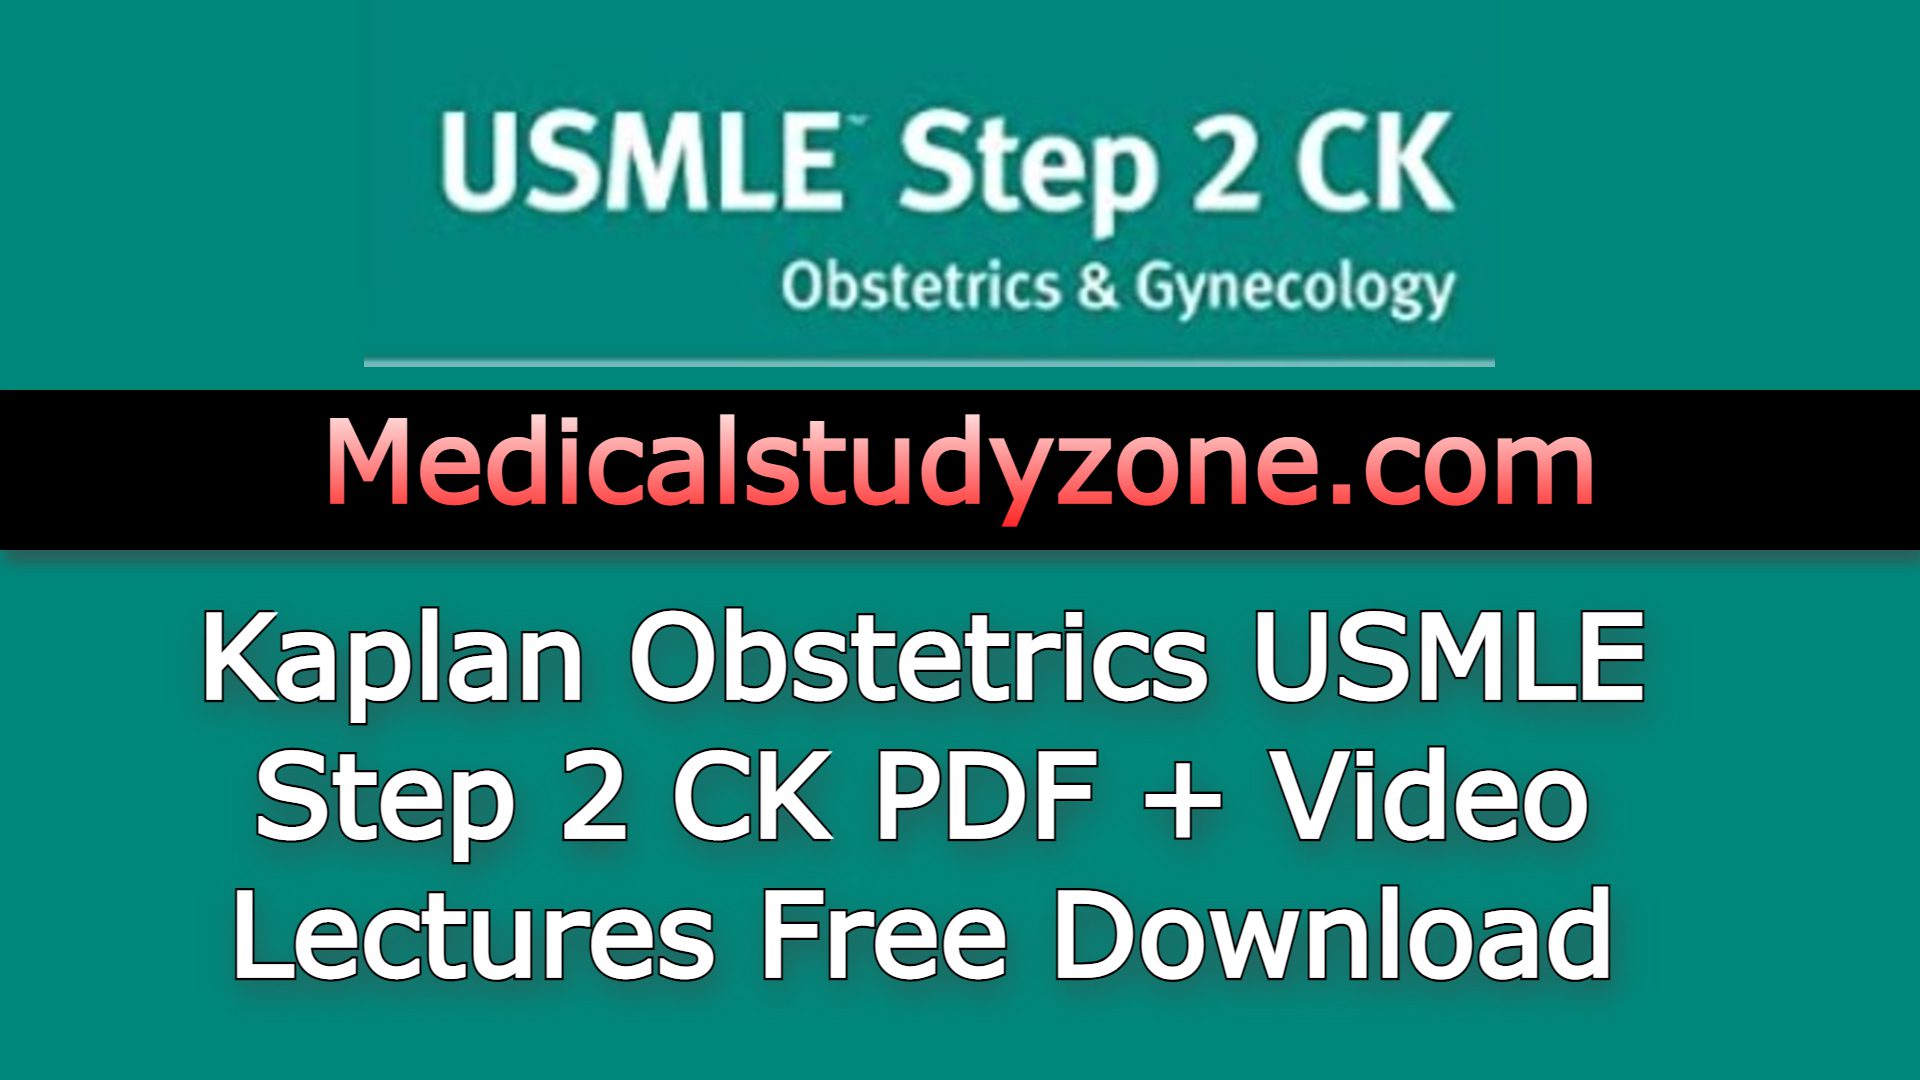 Kaplan Obstetrics USMLE Step 2 CK PDF + Video Lectures 2022 Free Download